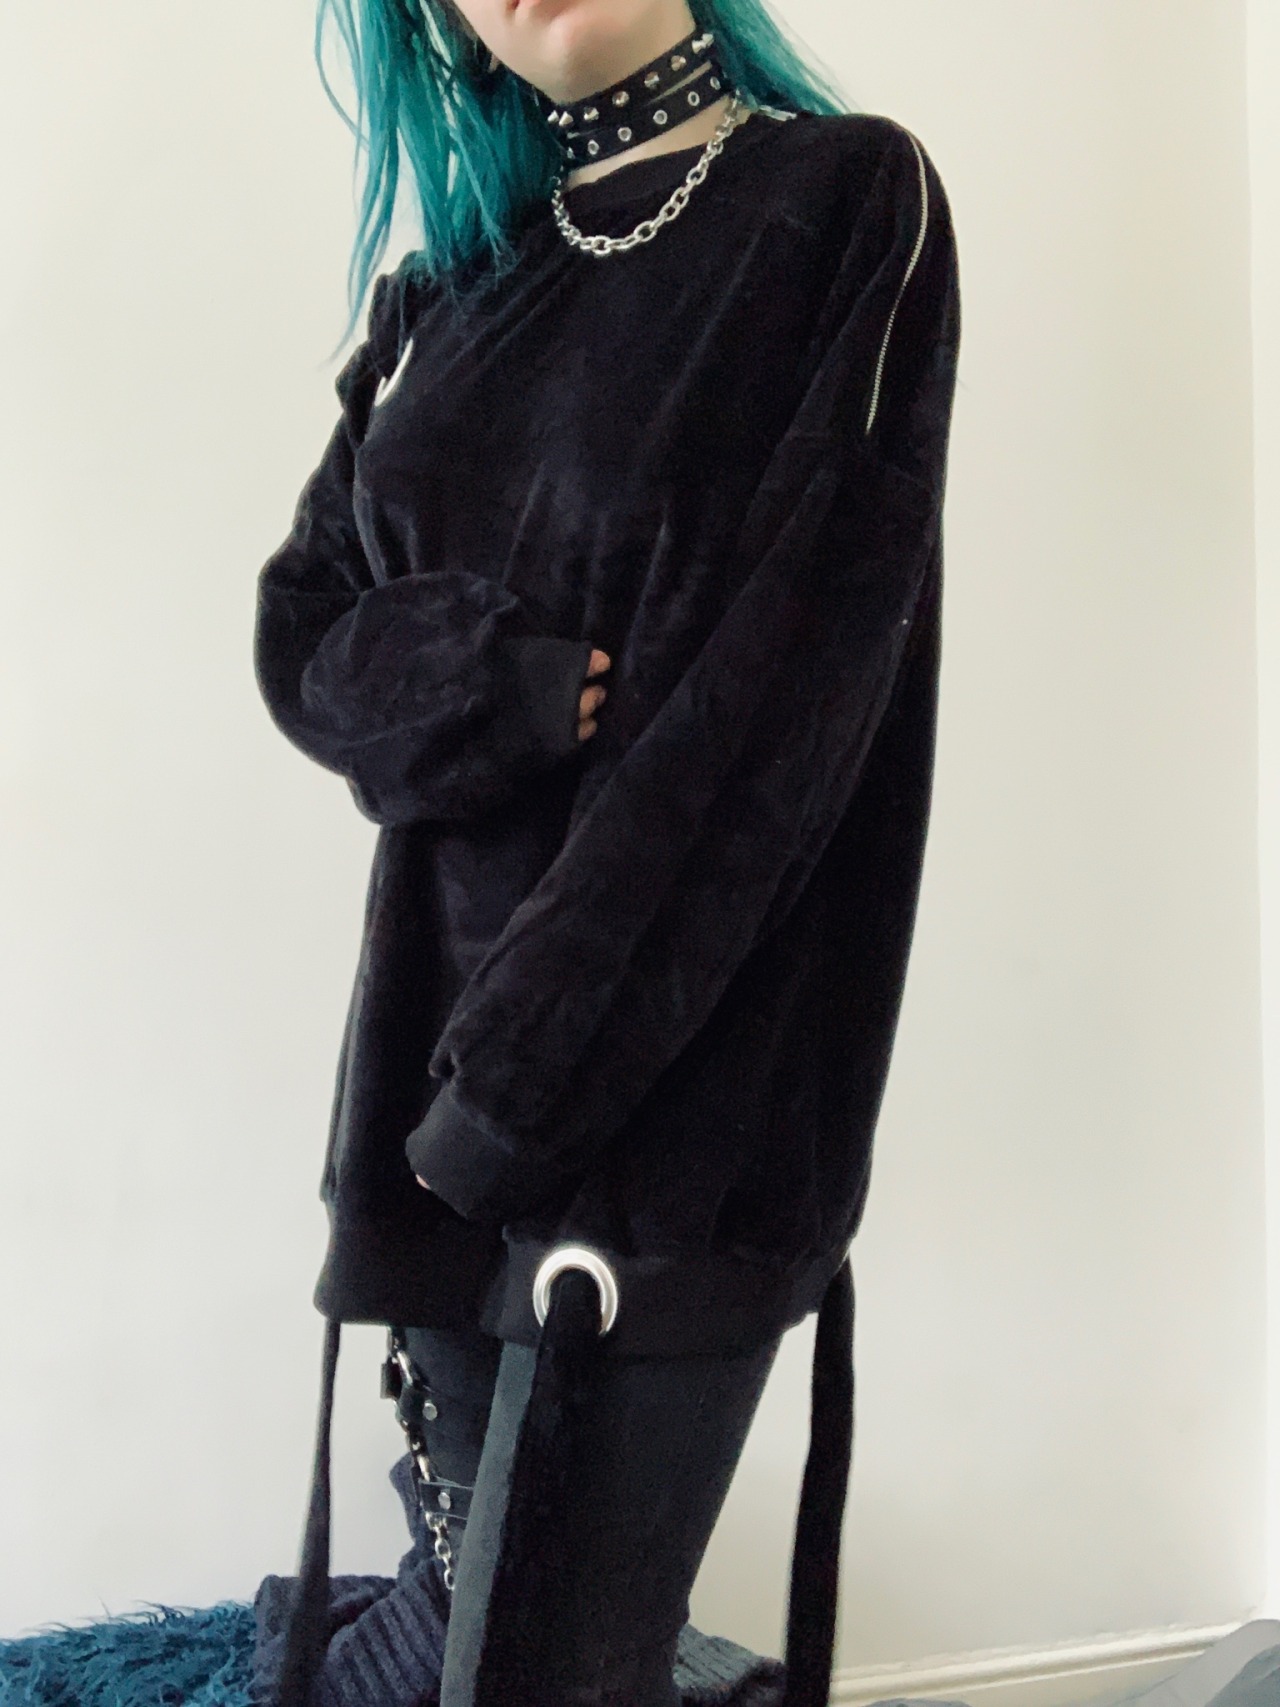 goth clothing on Tumblr